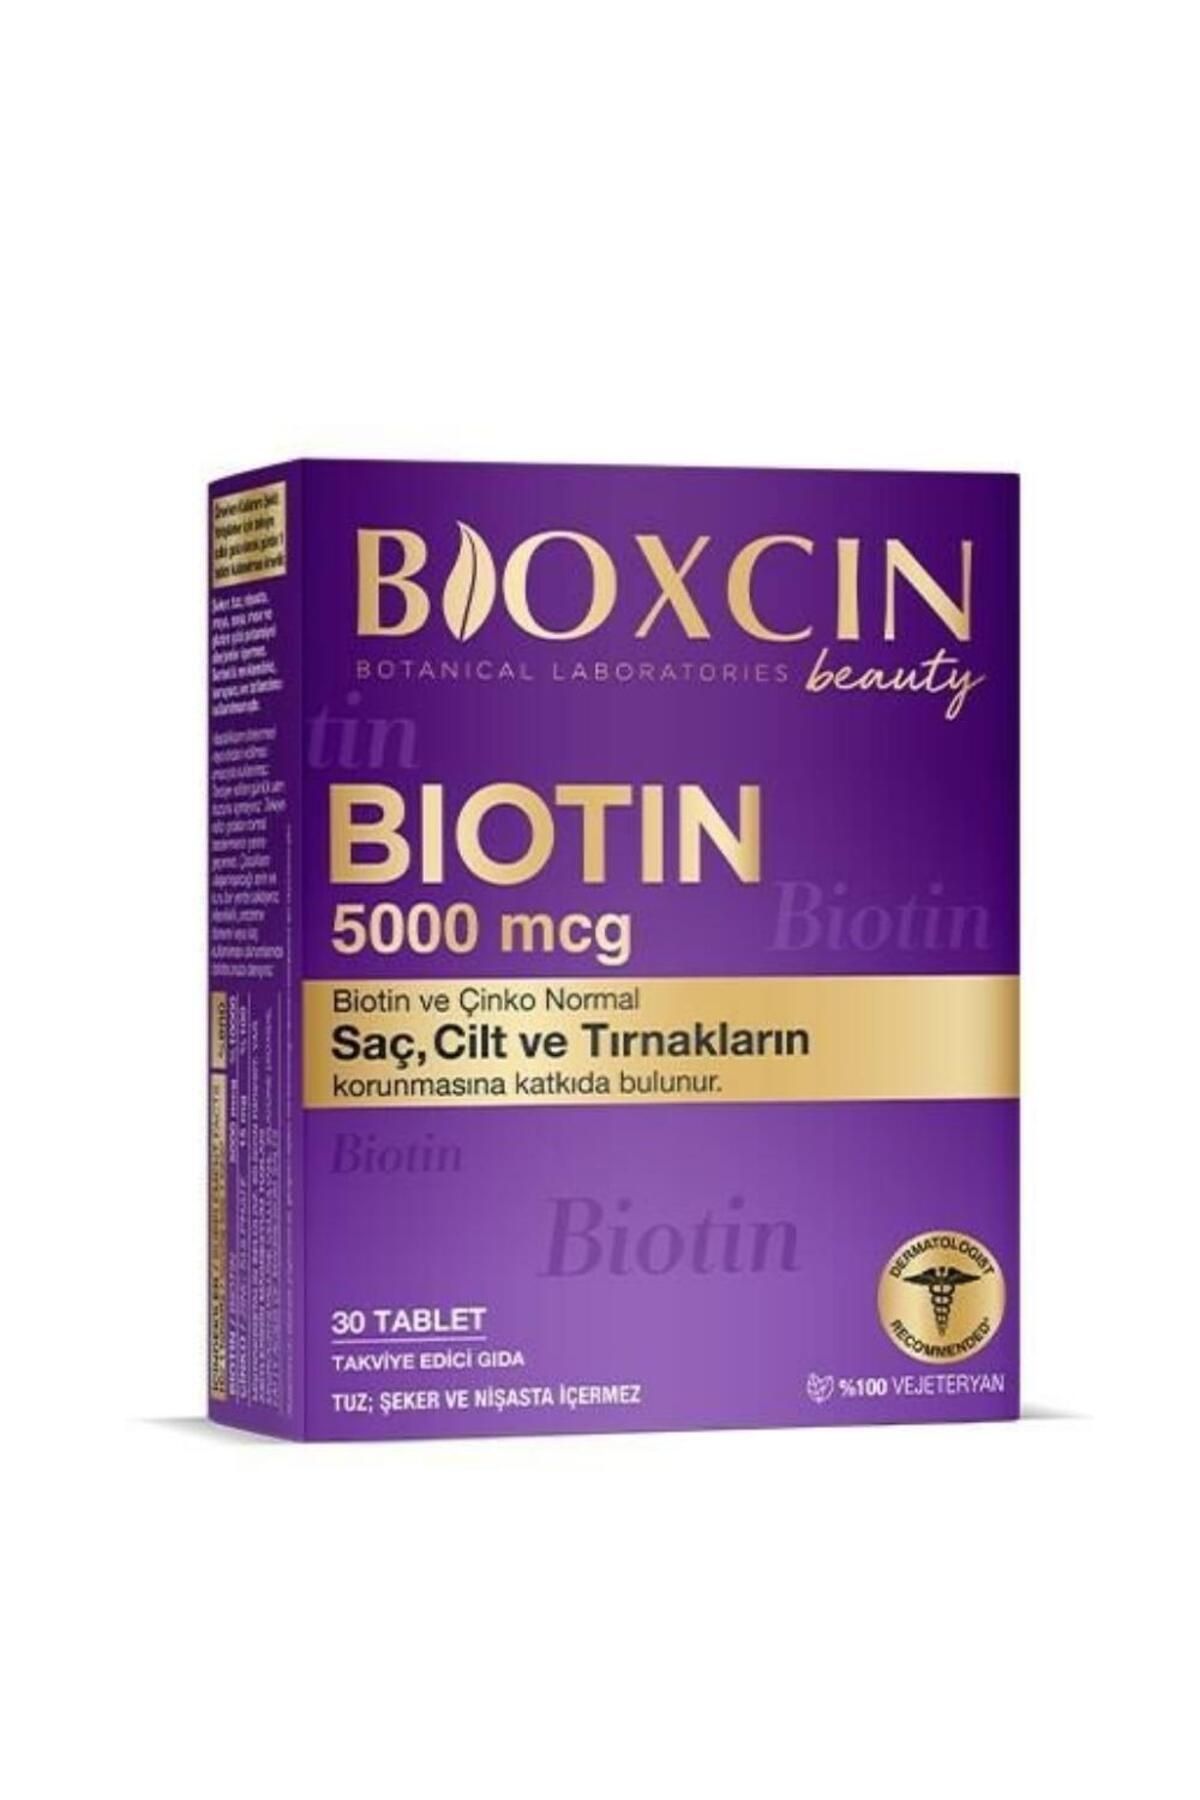 Bioxcin Beauty Biotin 500 Mcg 30 Tablet